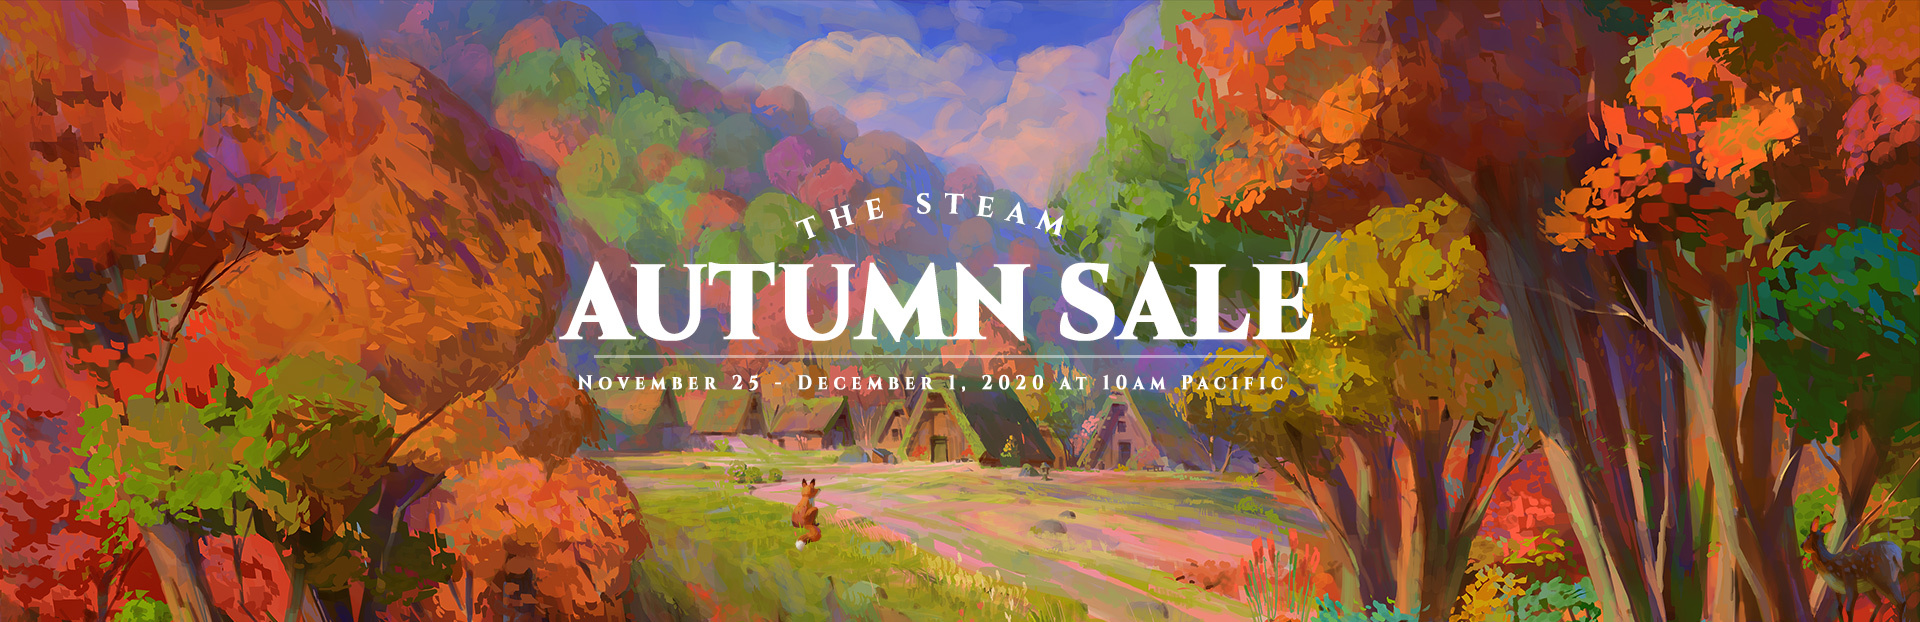 Steam Autumn Sale 2020 Spotlight Image